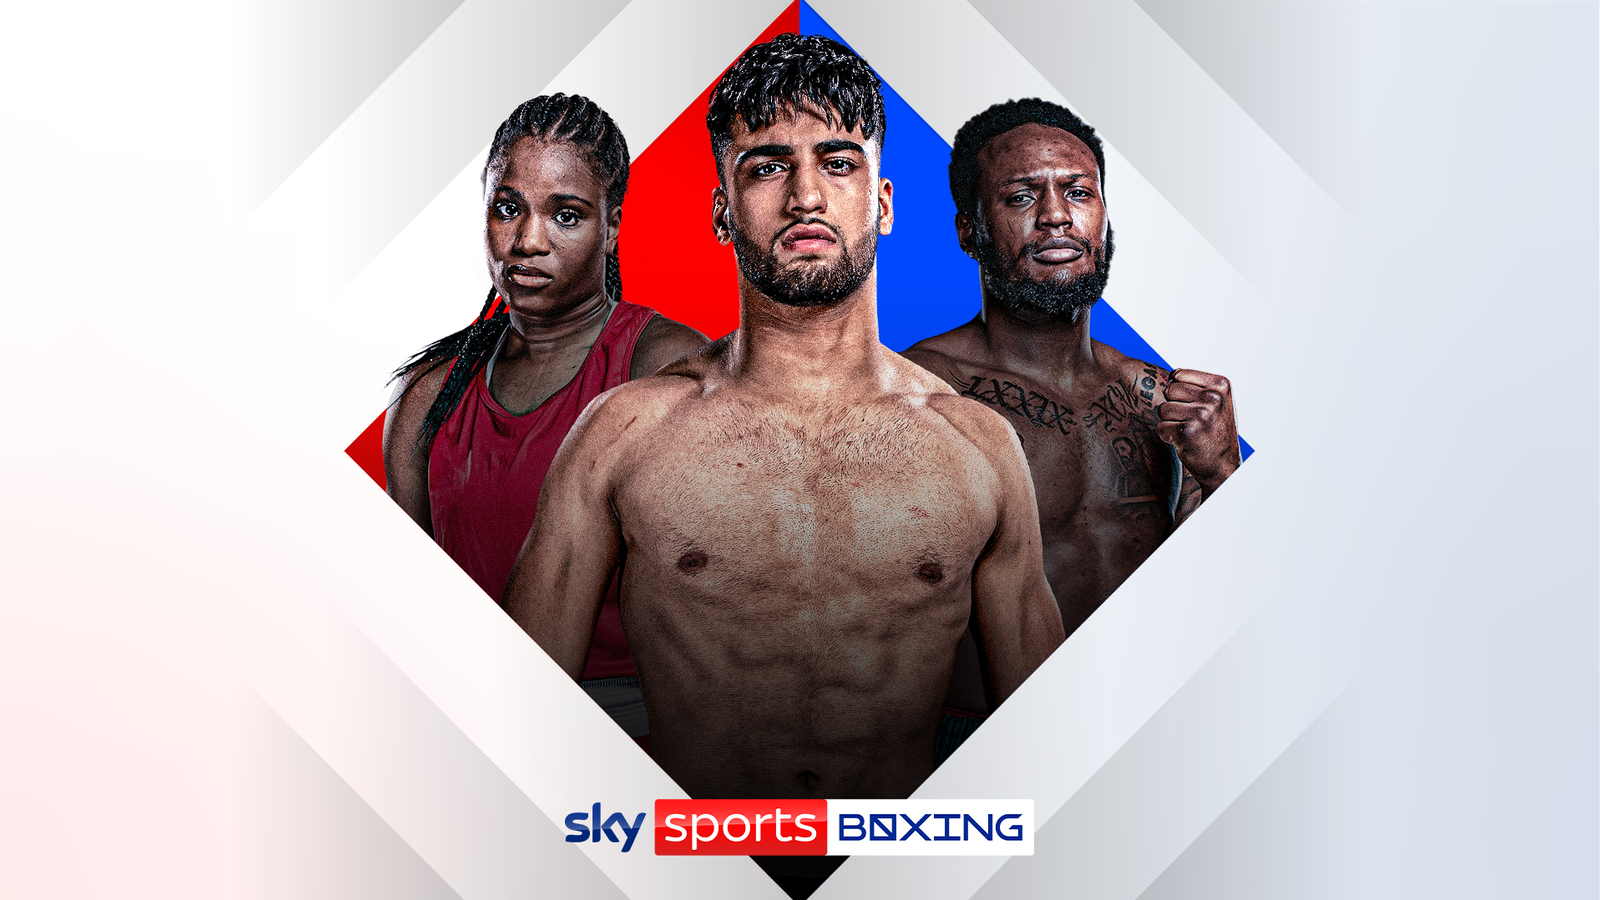 Adam Azim, Caroline Dubois and Viddal Riley will fight next on February 11 live on Sky Sports Boxing News Sky Sports